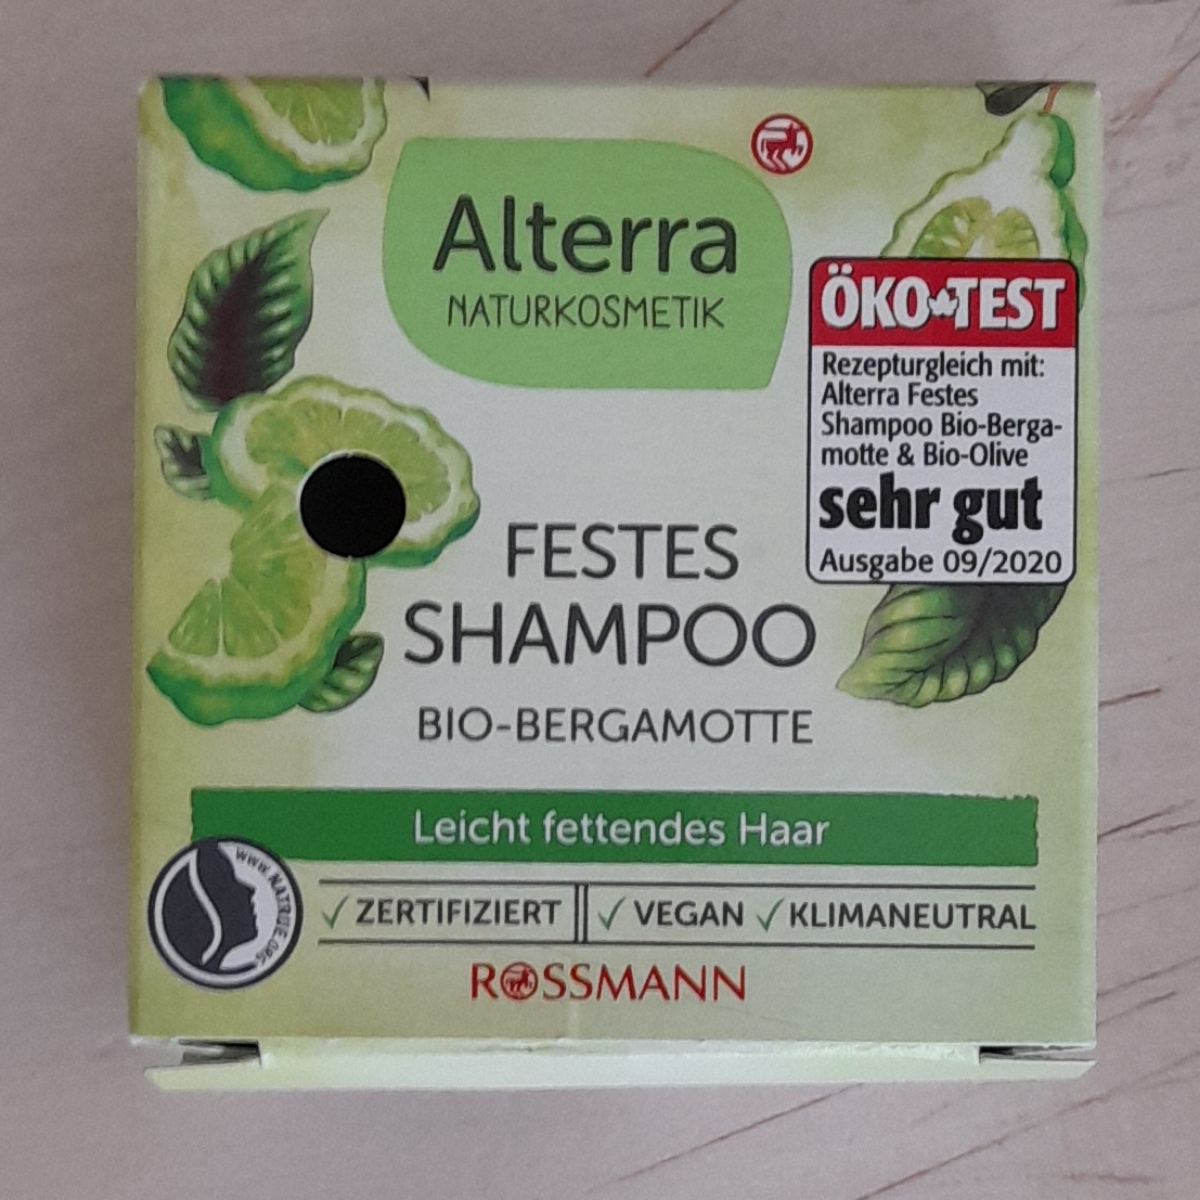 Alterra Bio Bergamotte Festes Shampoo Reviews | abillion